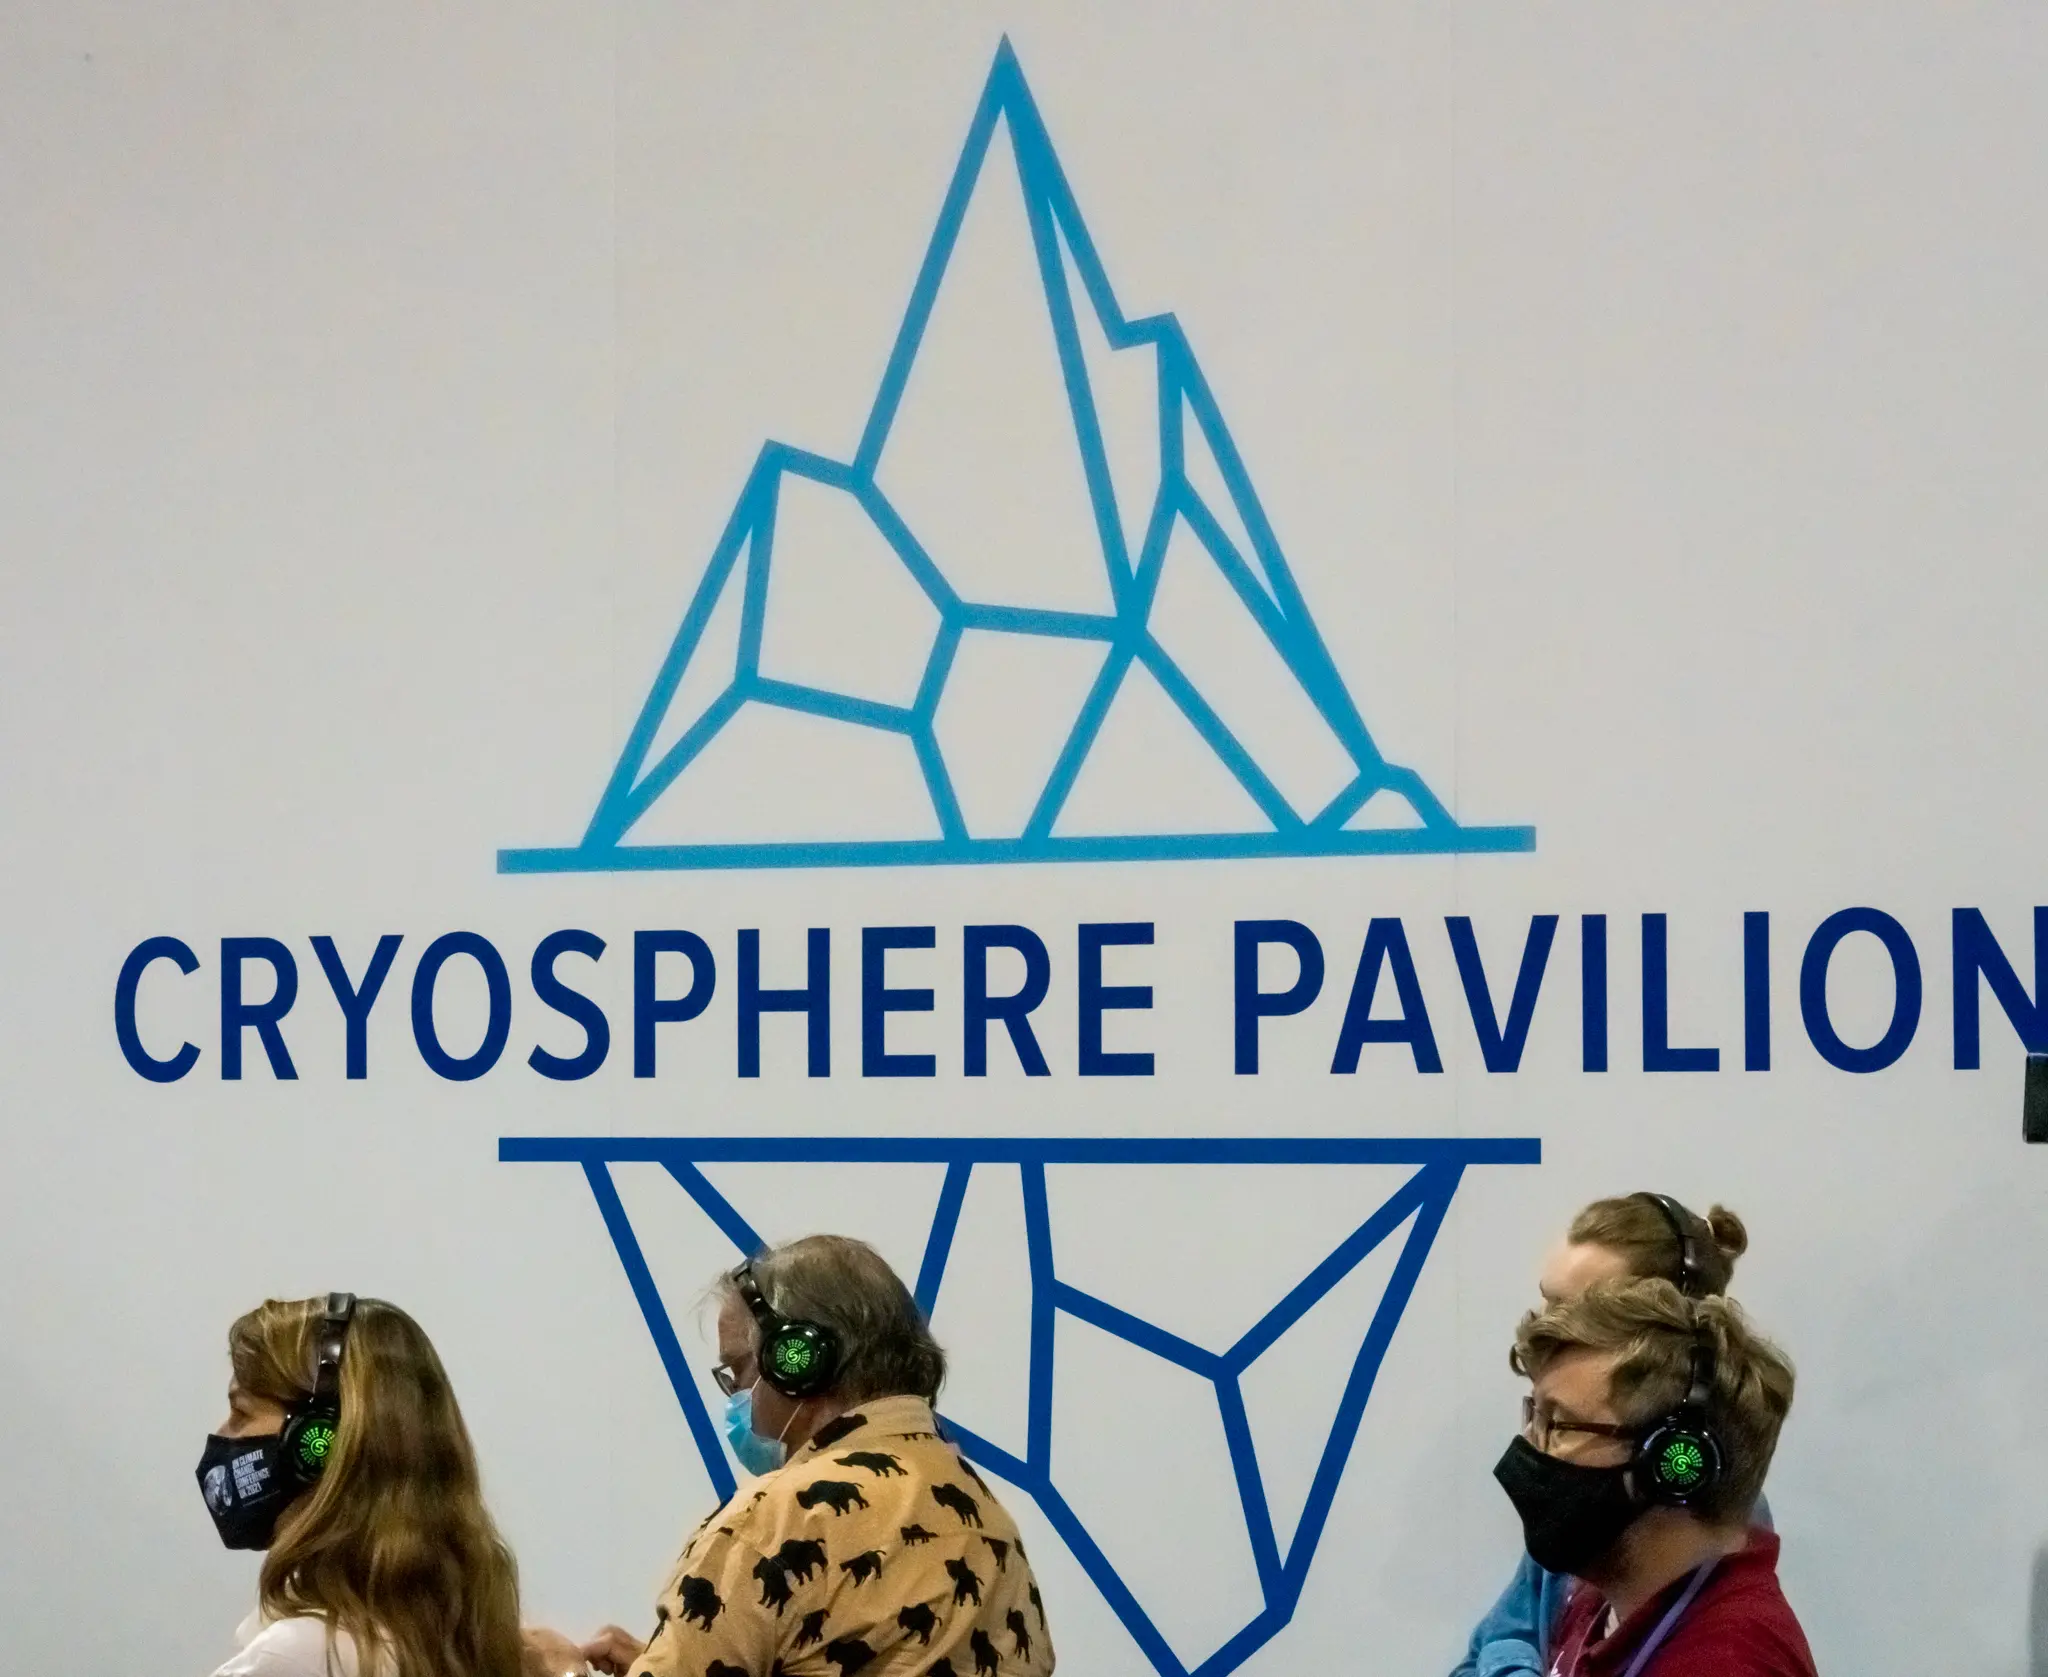 Cryosphere Pavilion